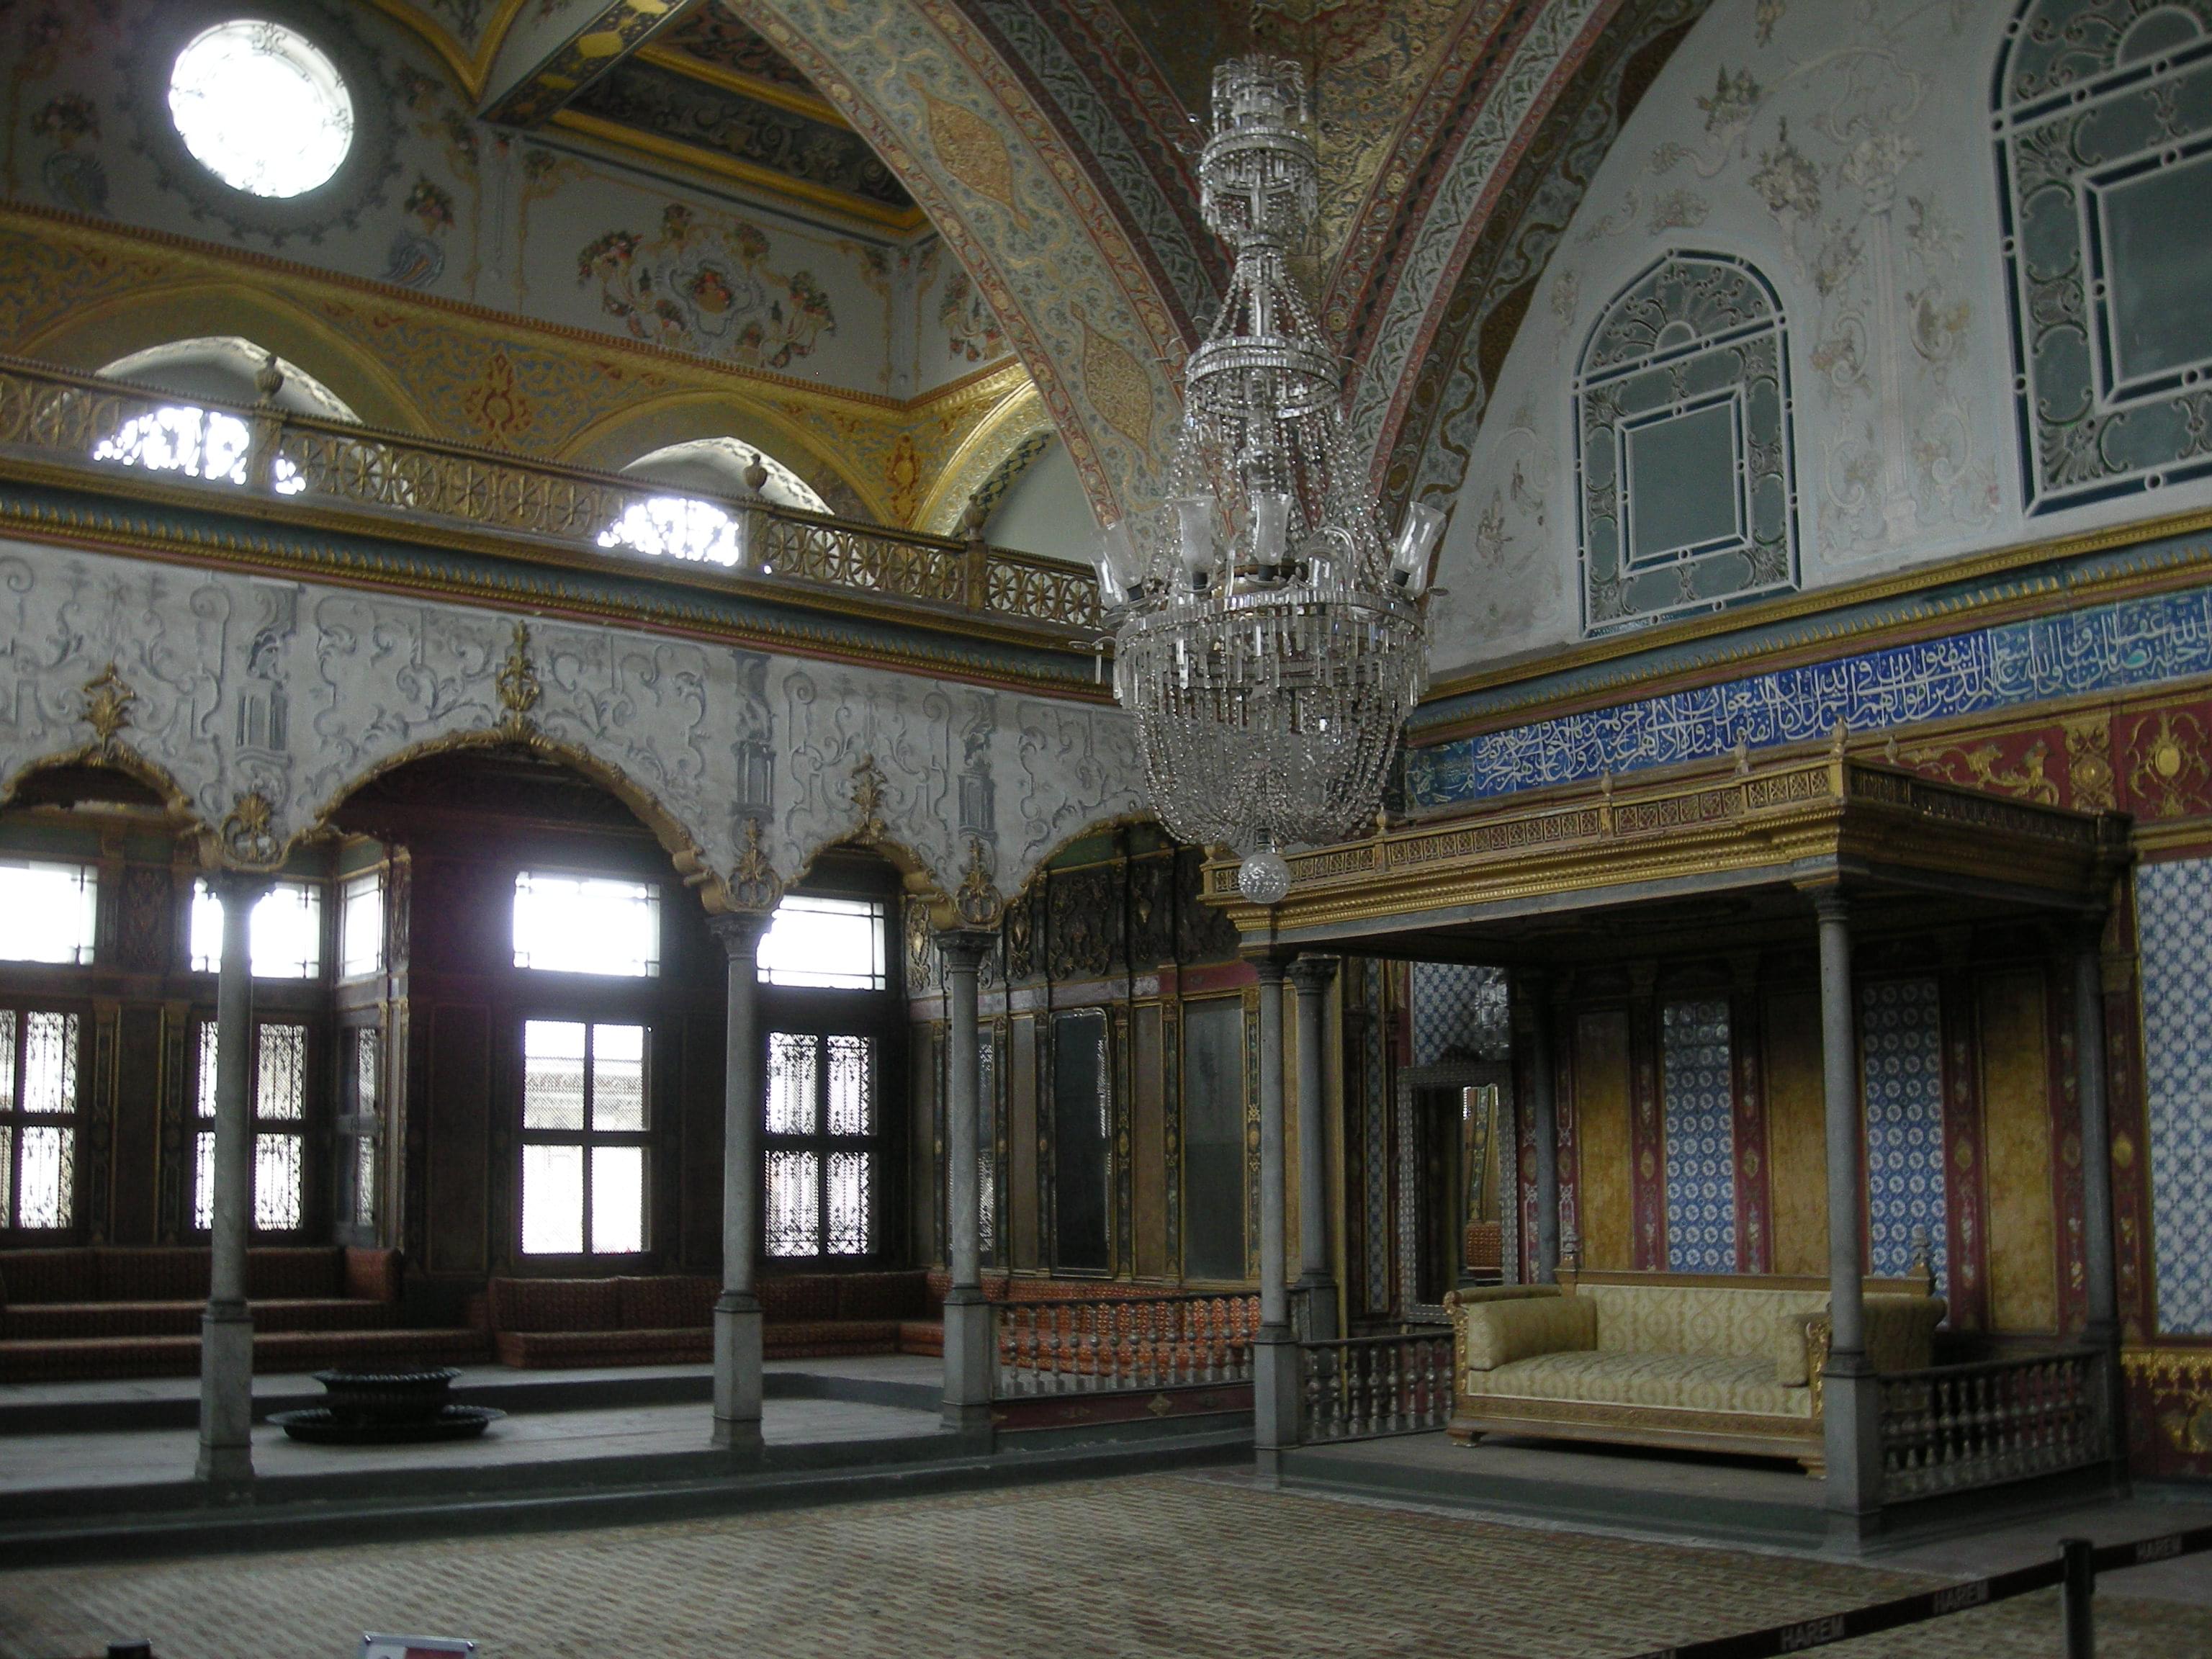 Inside the Topkapi Palace